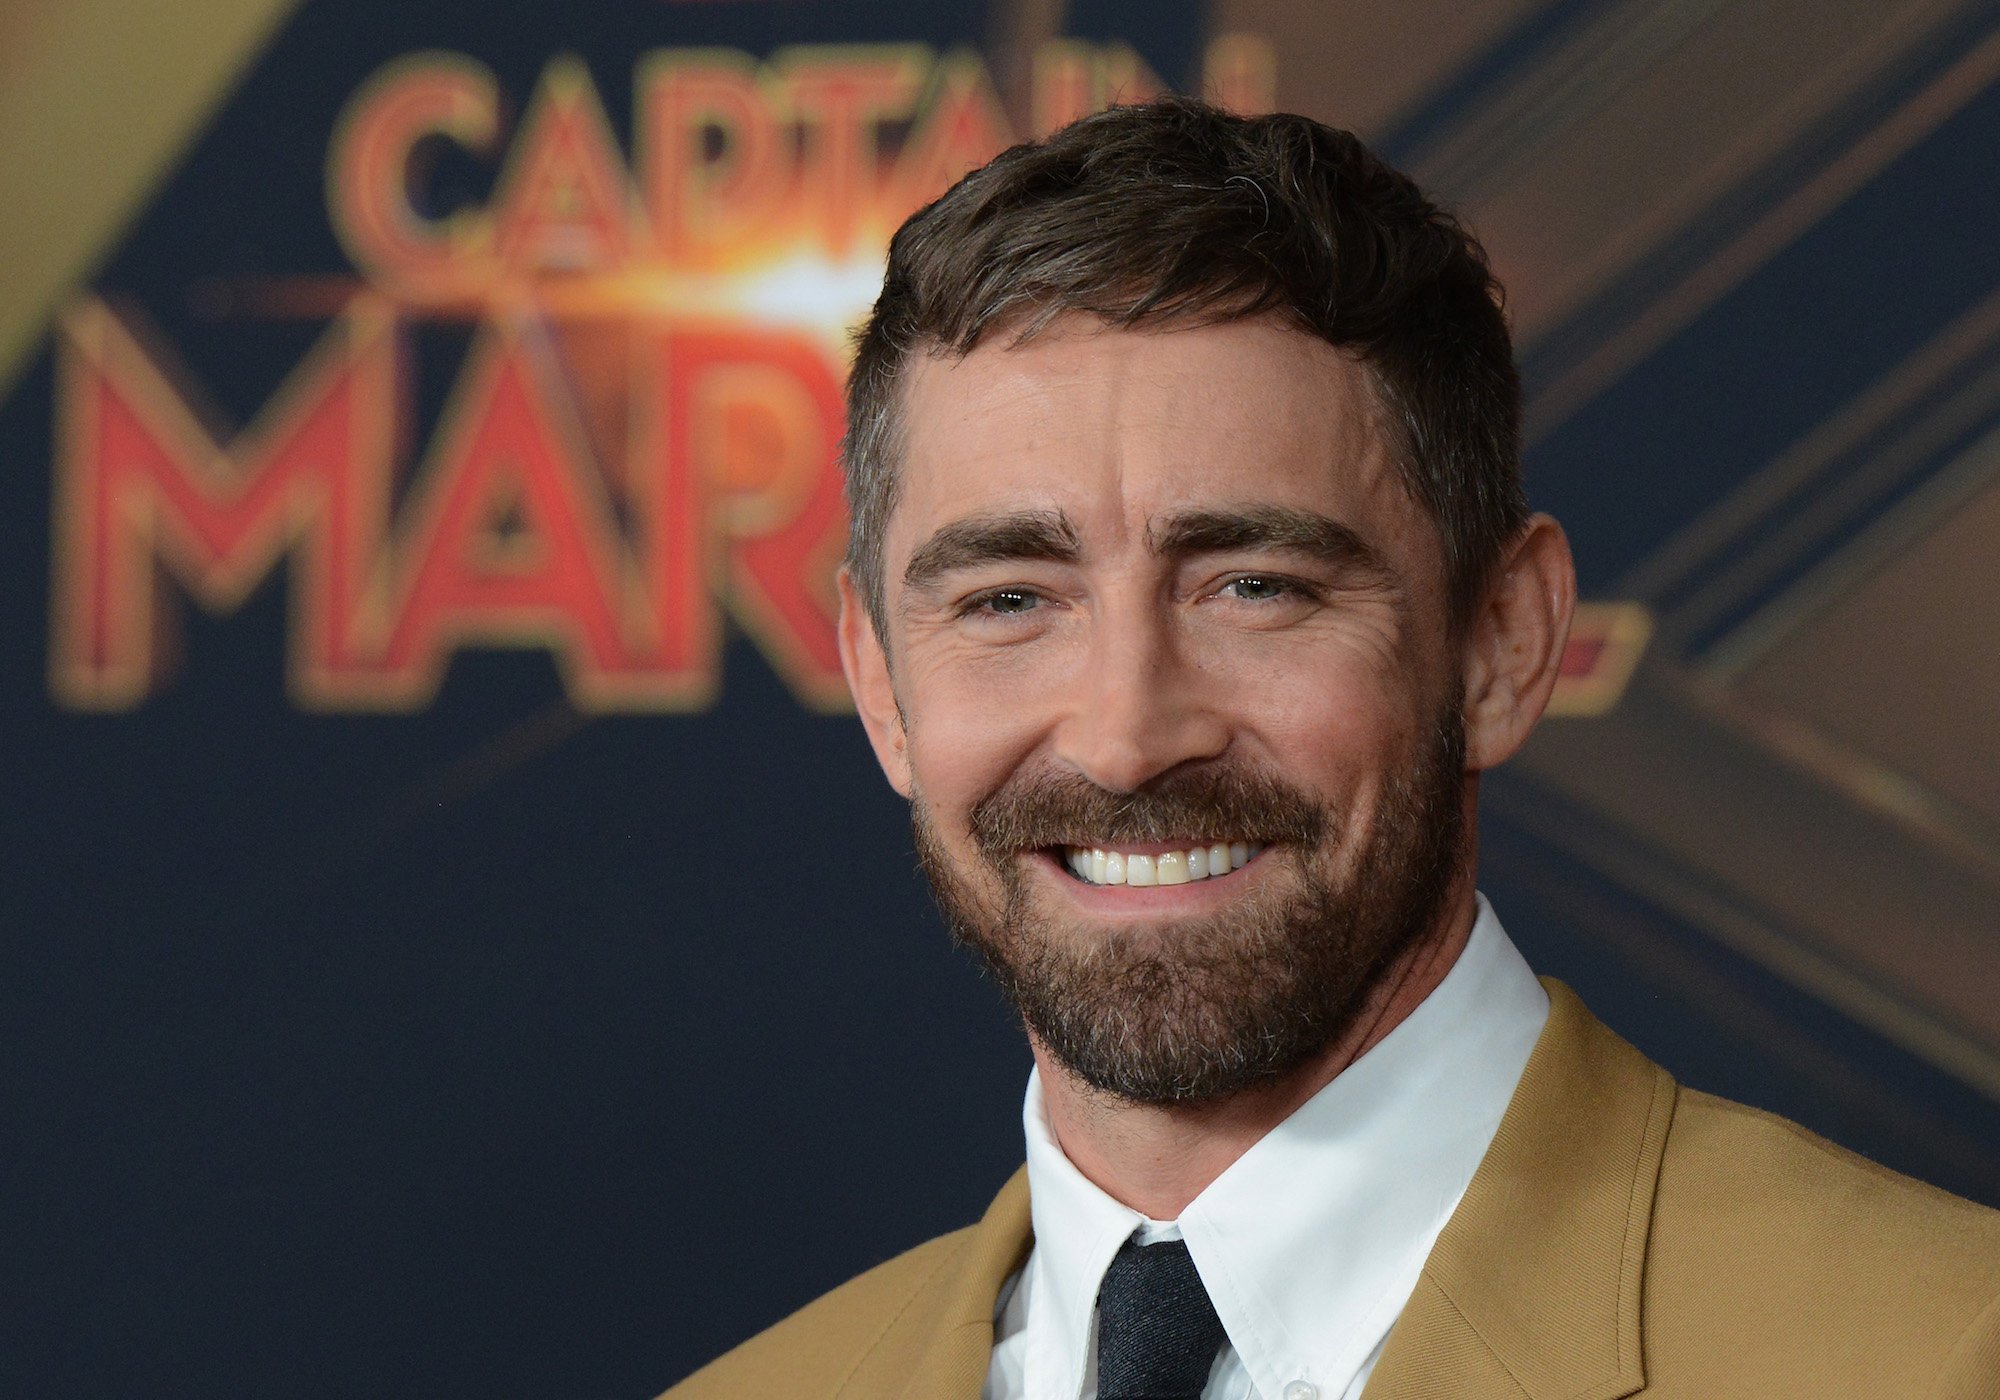 Lee Pace attends the Marvel Studios "Captain Marvel" Premiere